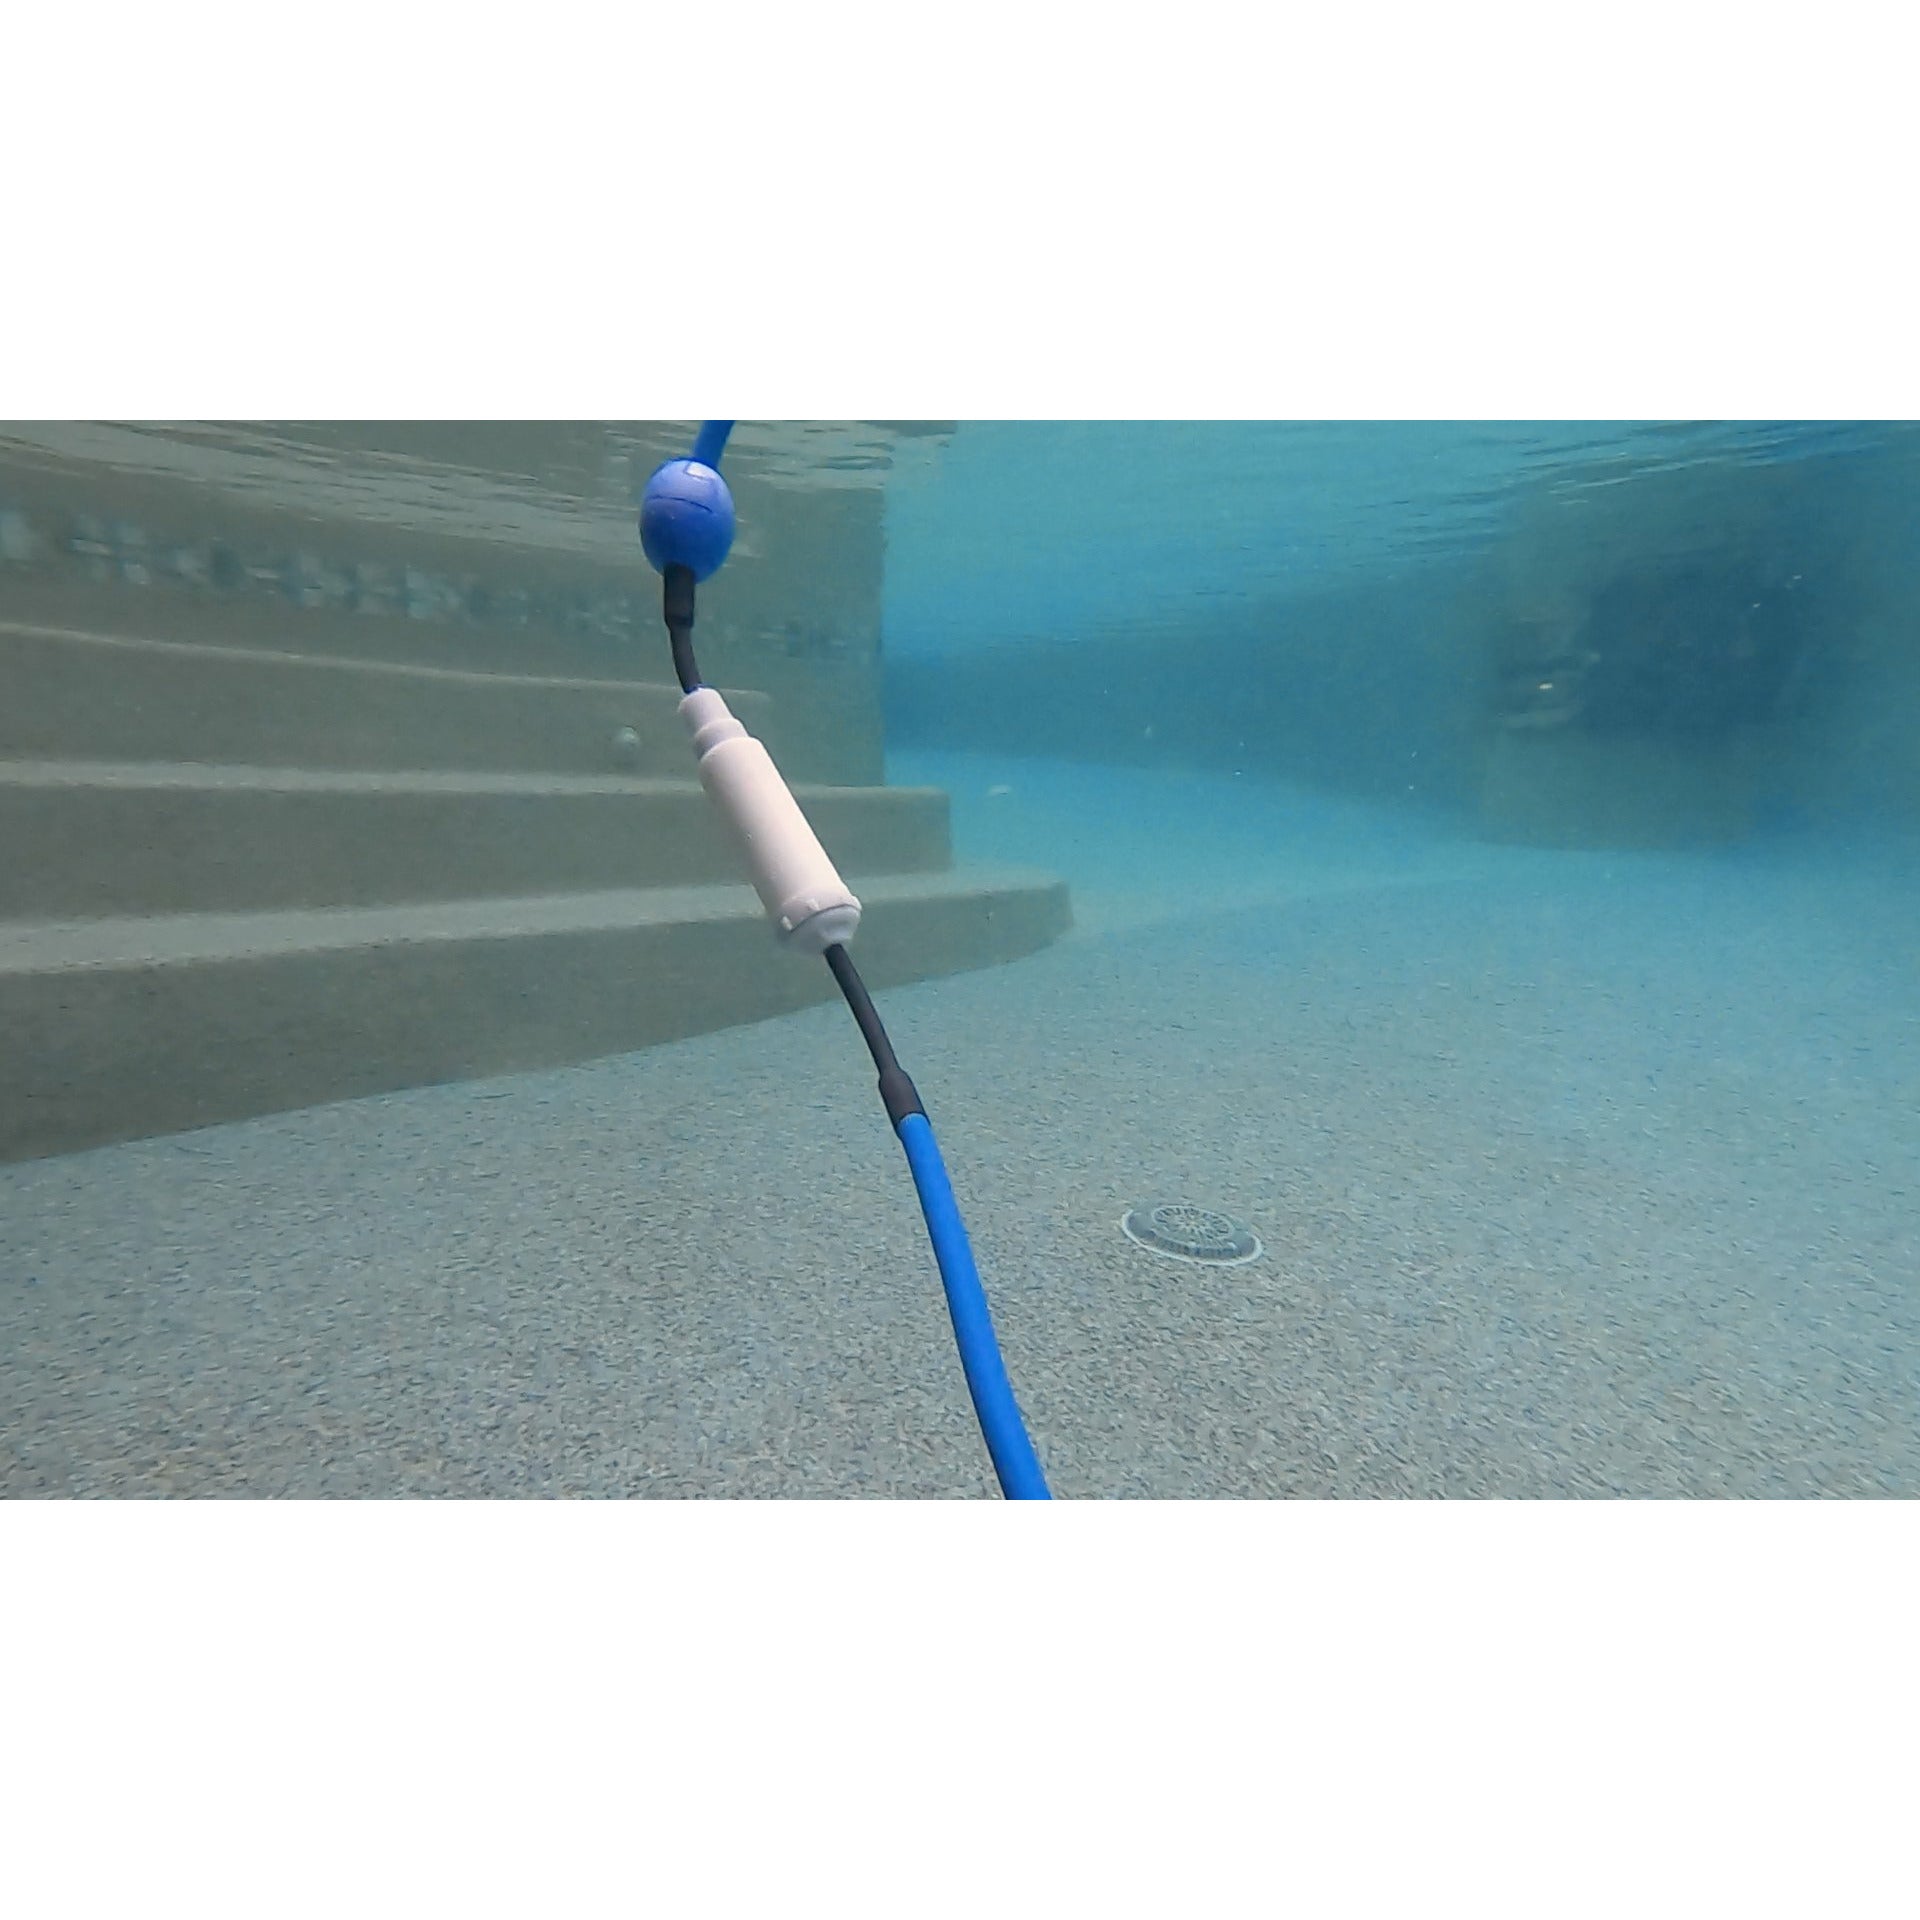 Enhanced Warranty Maytronics Dolphin T45 Robotic Pool Cleaner